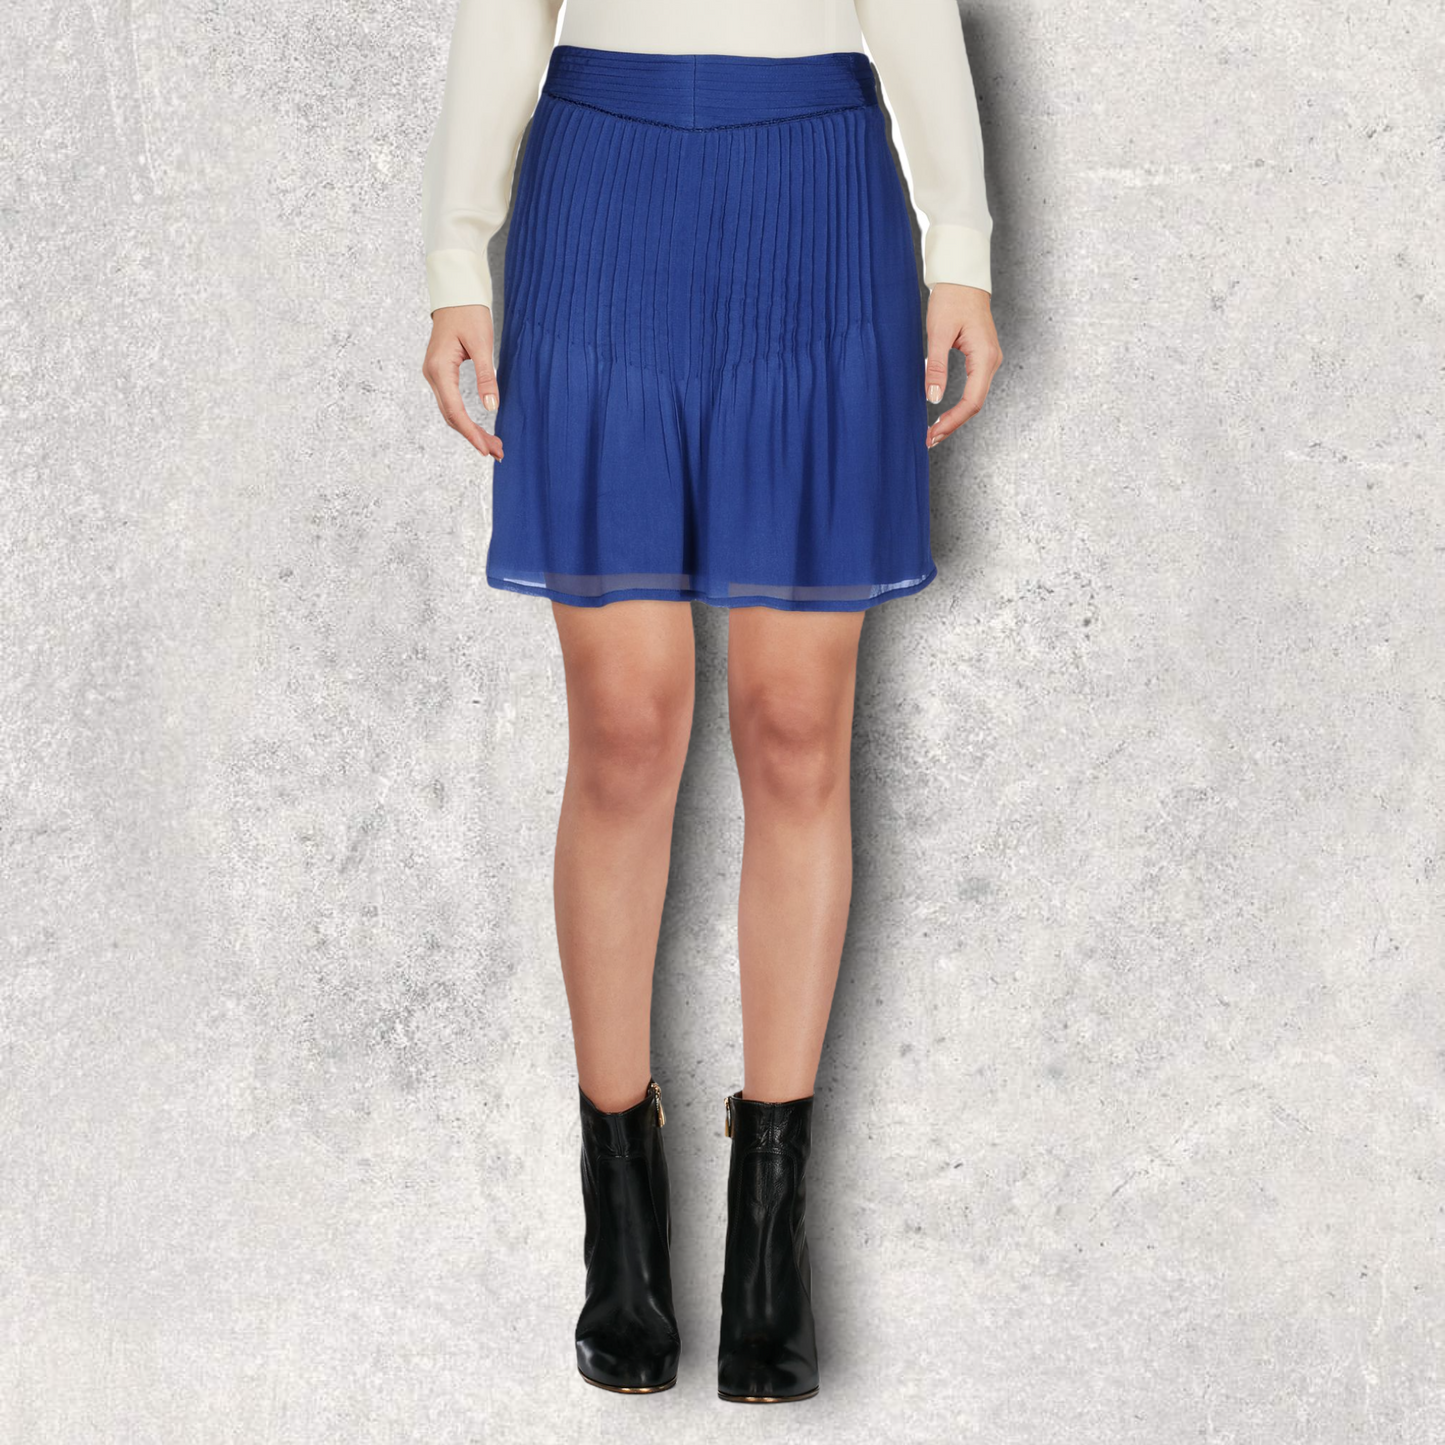 Hoss Intropia Blue Pleated Crepe Mini Skirt UK 14 US 10 EU 42 BNWT RRP £151 Timeless Fashions